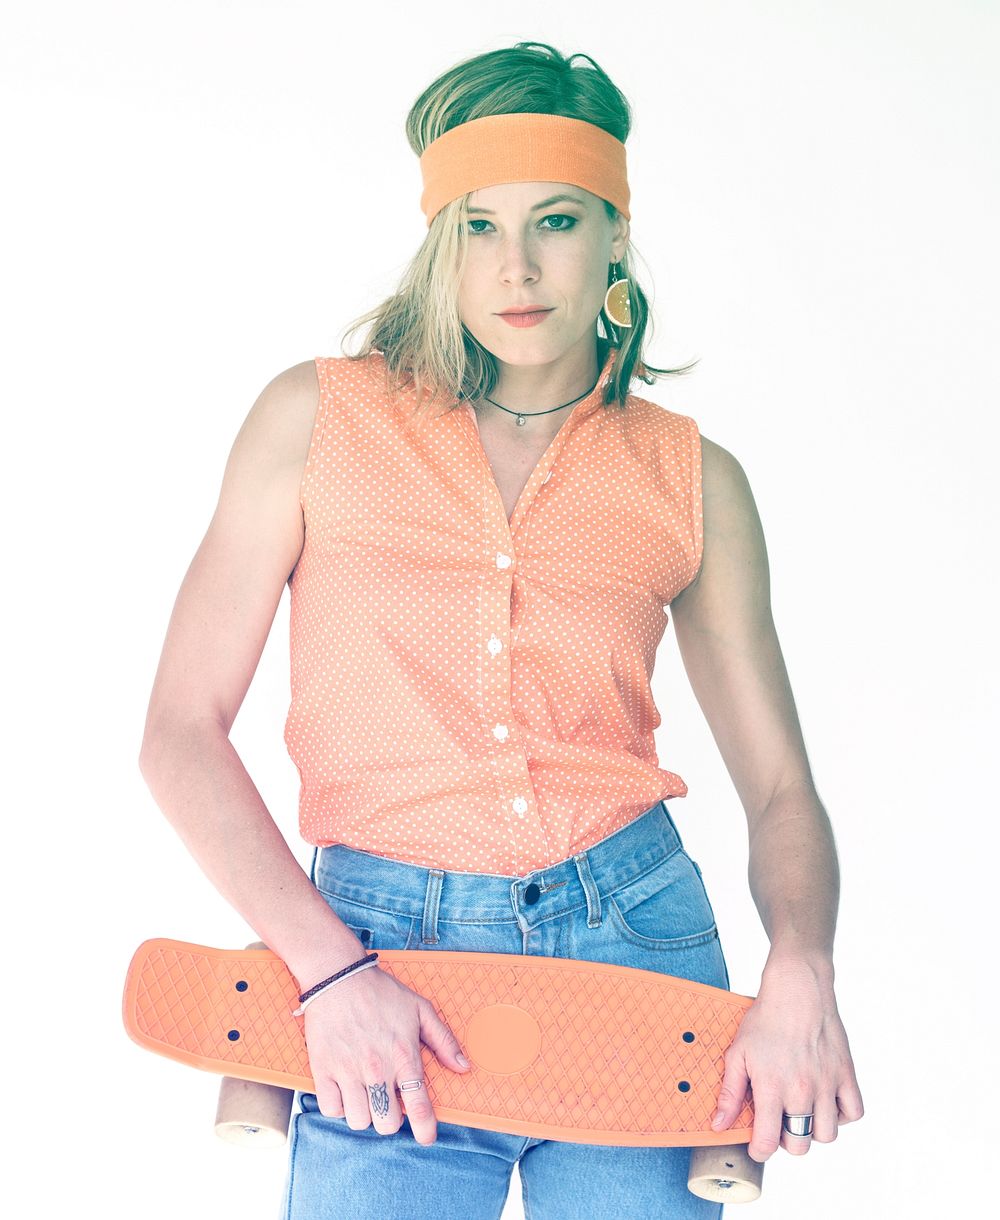 Woman portrait skateboarder sporty outfit